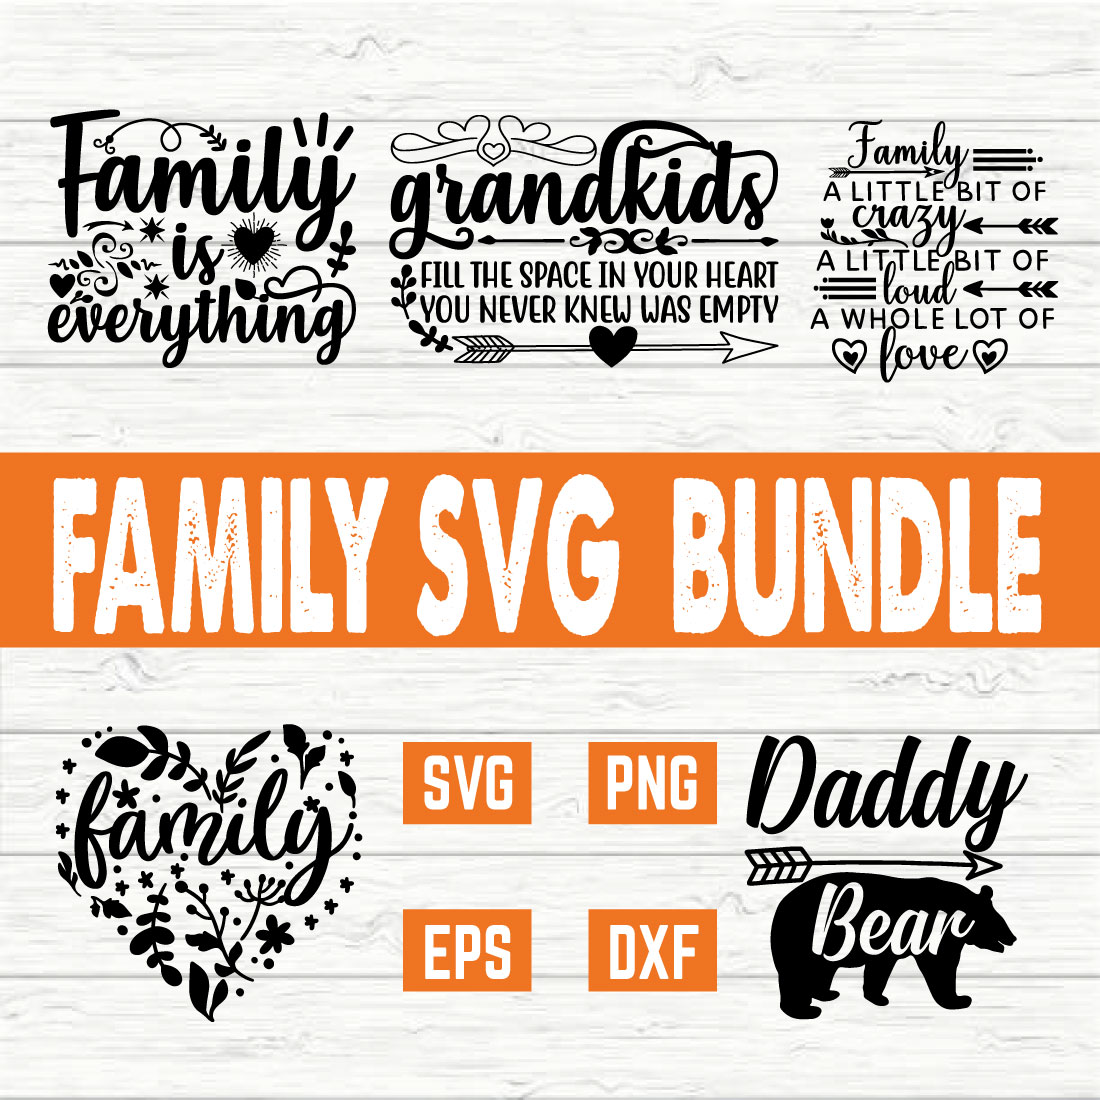 Family Svg Bundle vol 2 preview image.